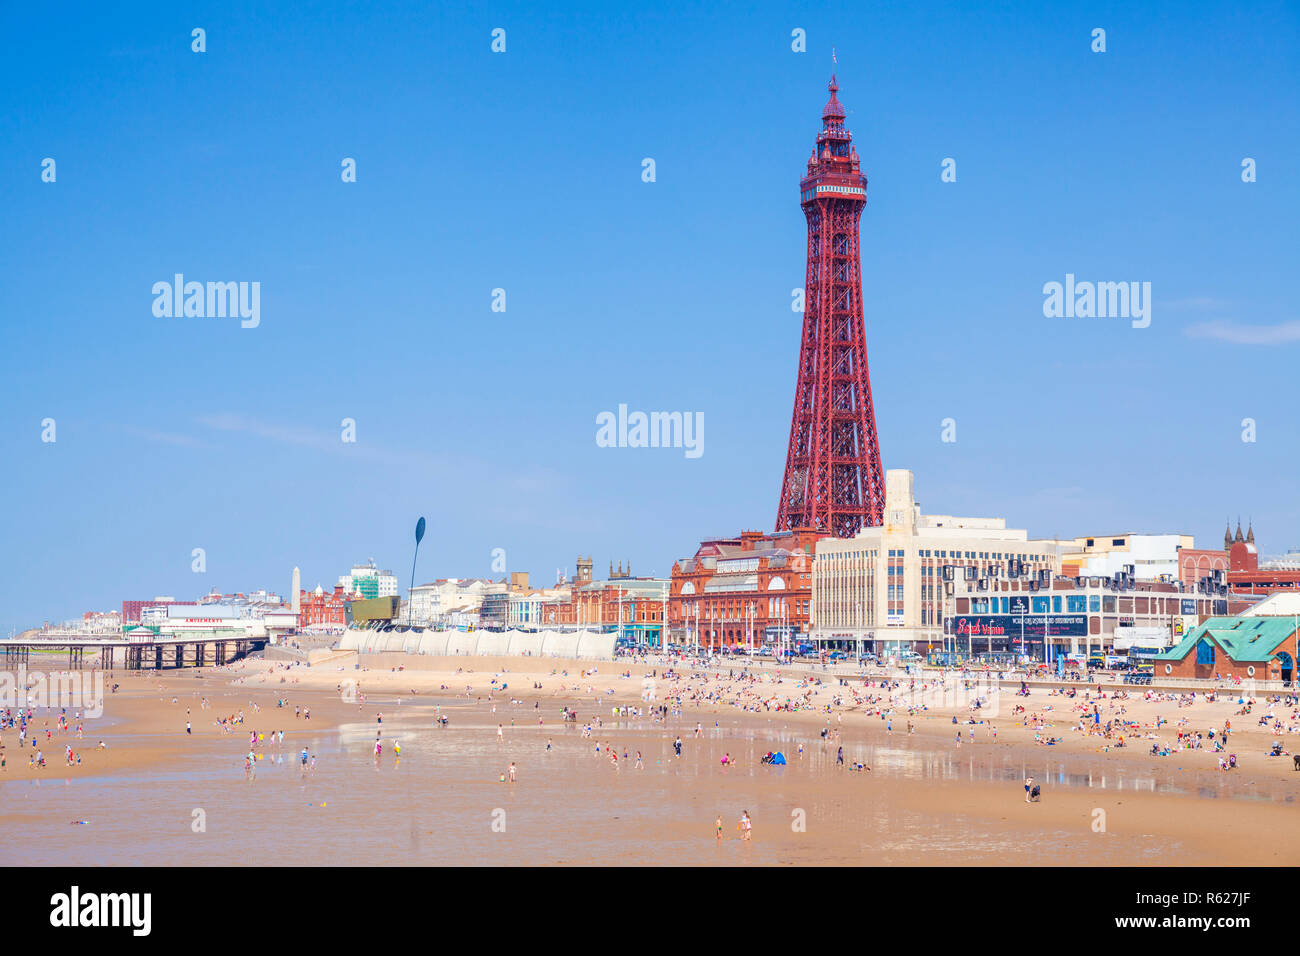 Blackpool beach summer and Blackpool tower Blackpool uk people on the sandy beach at Blackpool Lancashire England UK GB Europe Stock Photo